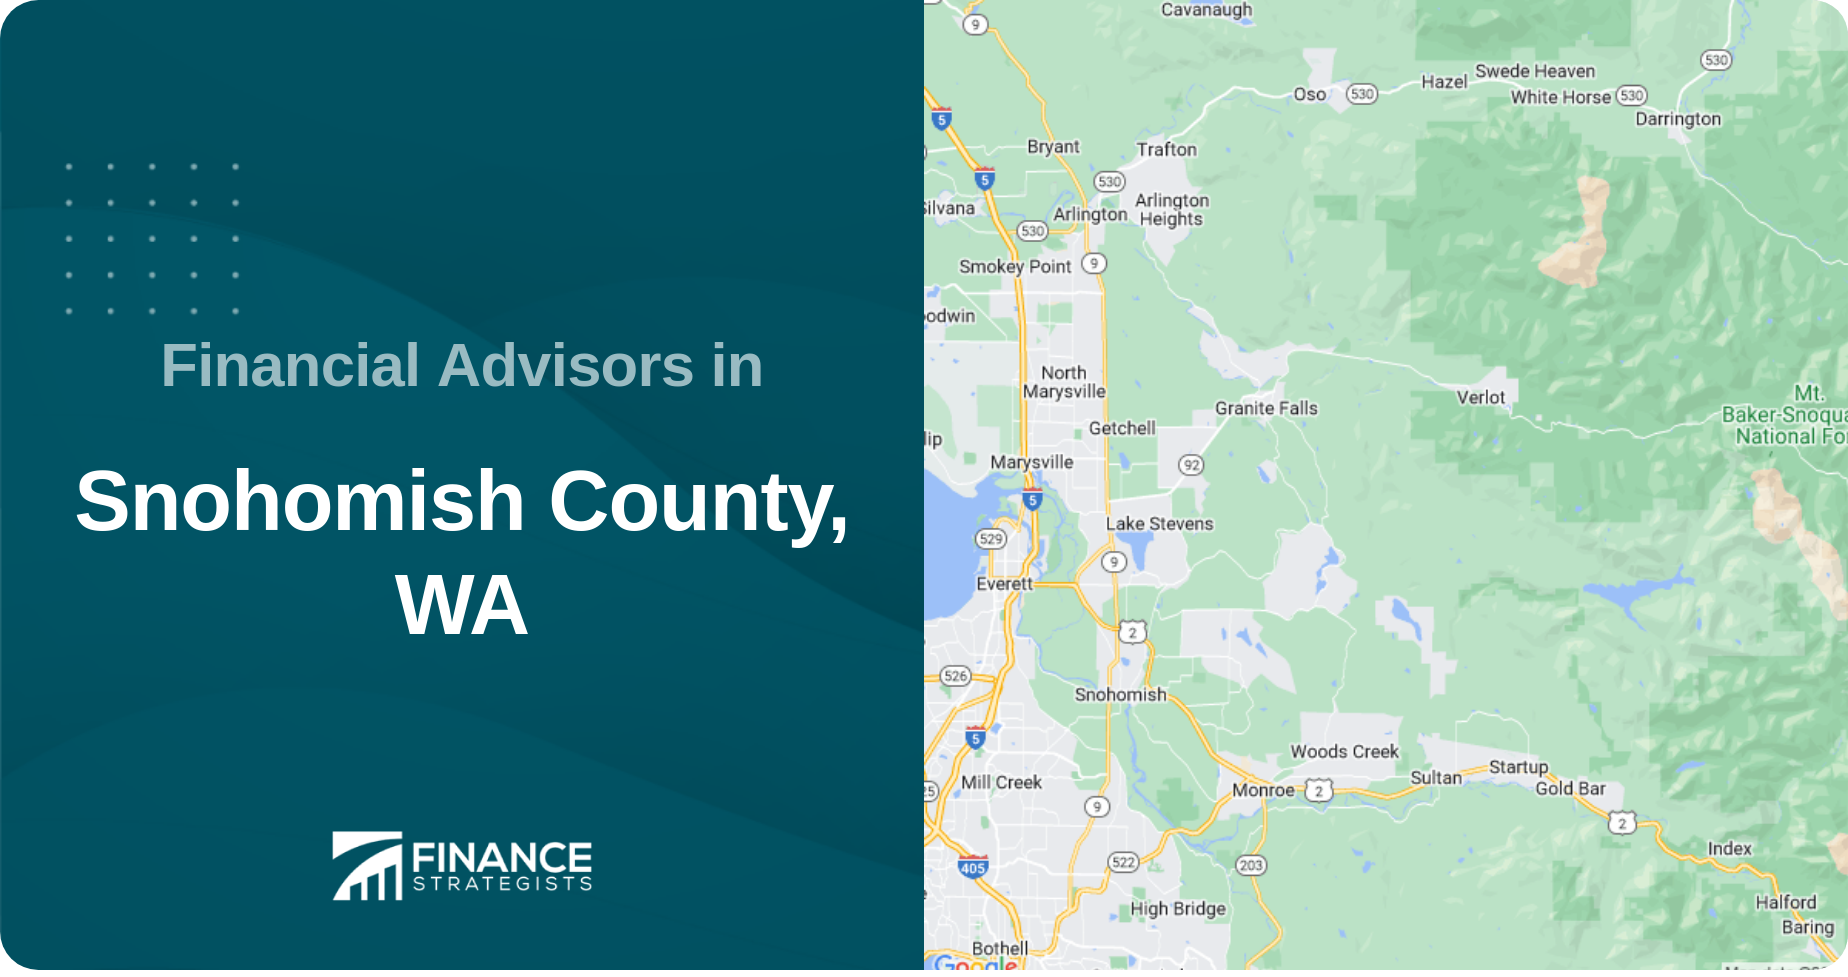 Financial Advisors in Snohomish County, WA